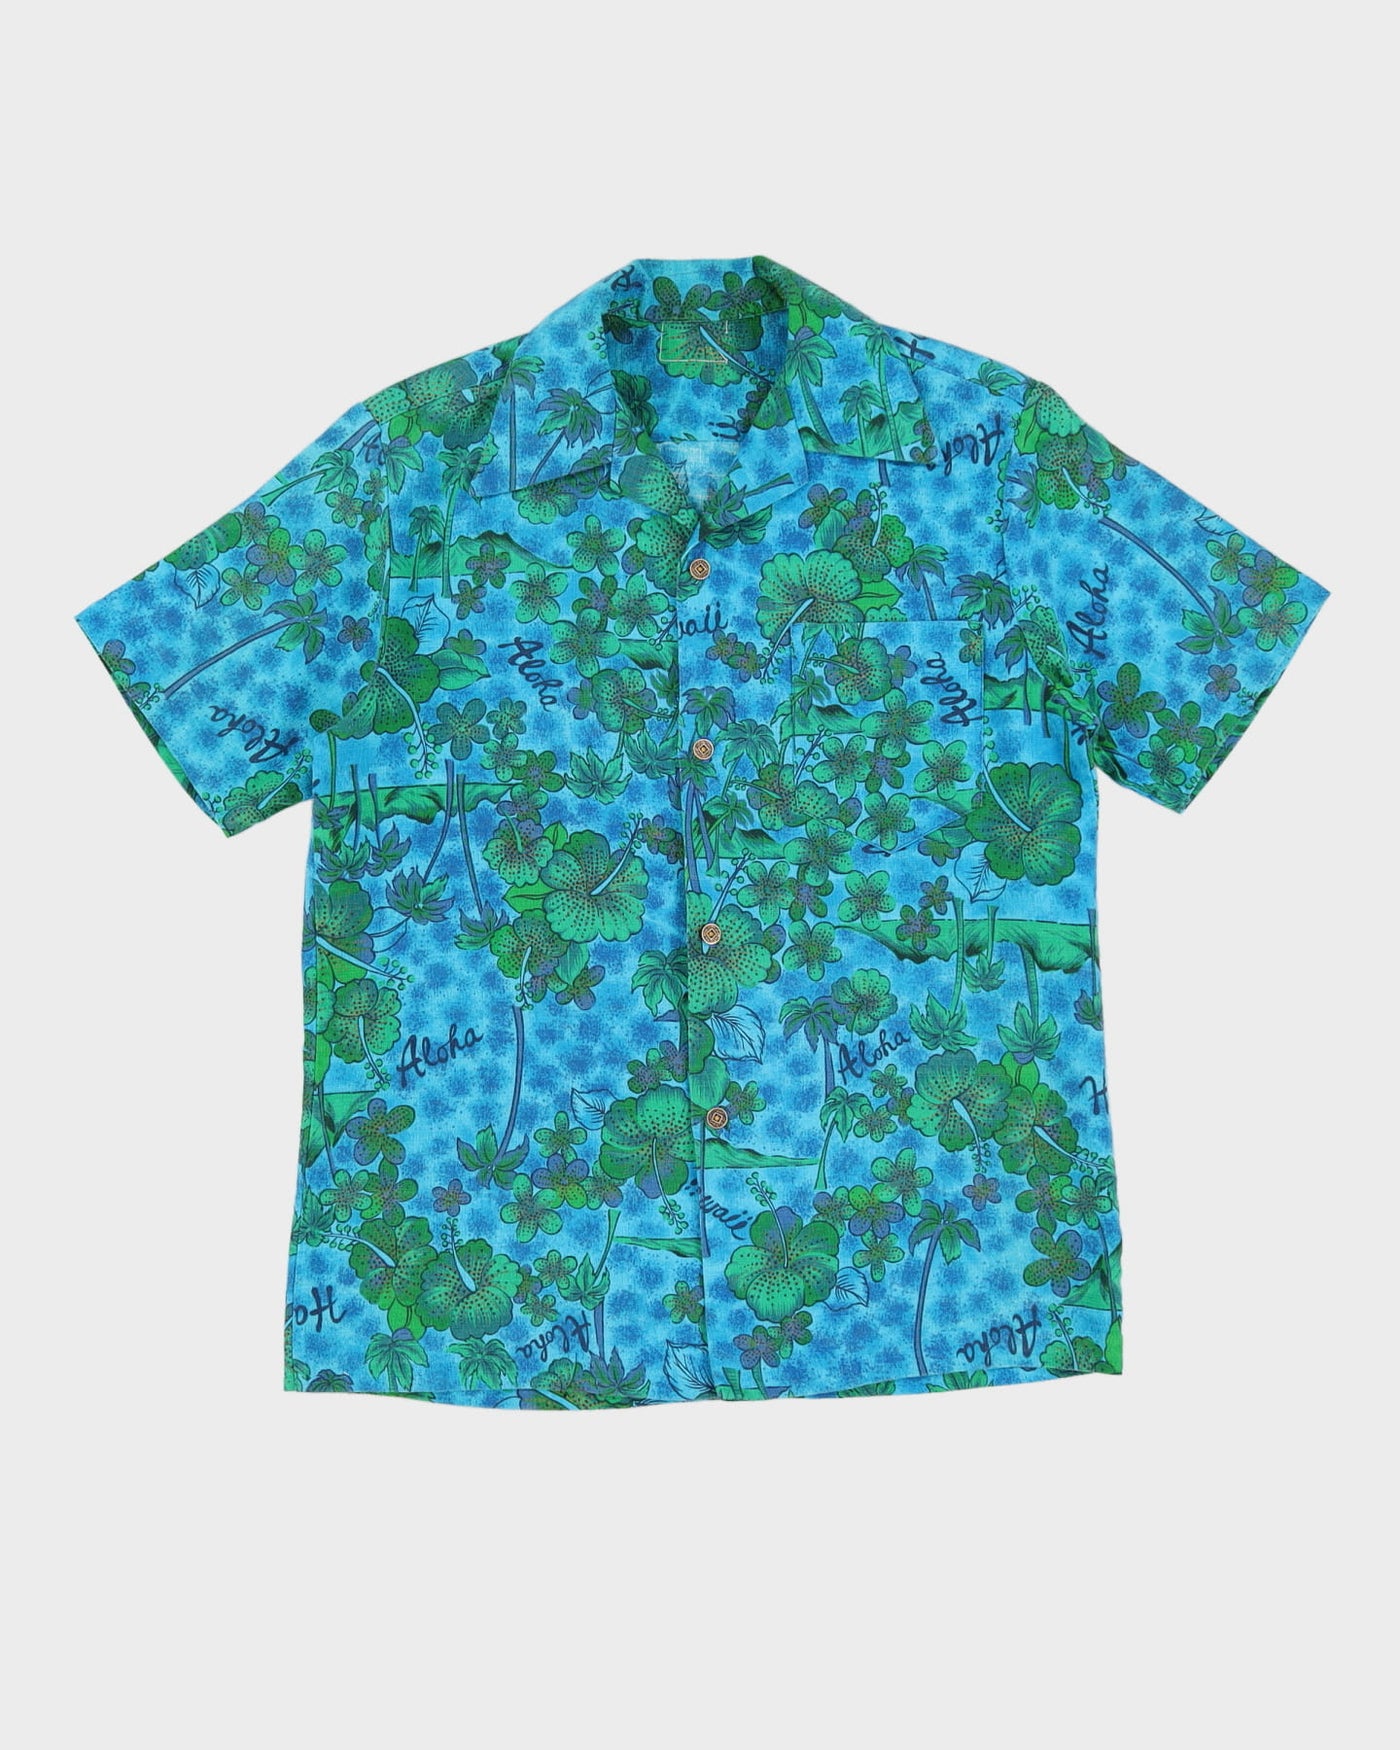 Vintage 60s Green / Blue Floral Design Hawaiian Shirt - M